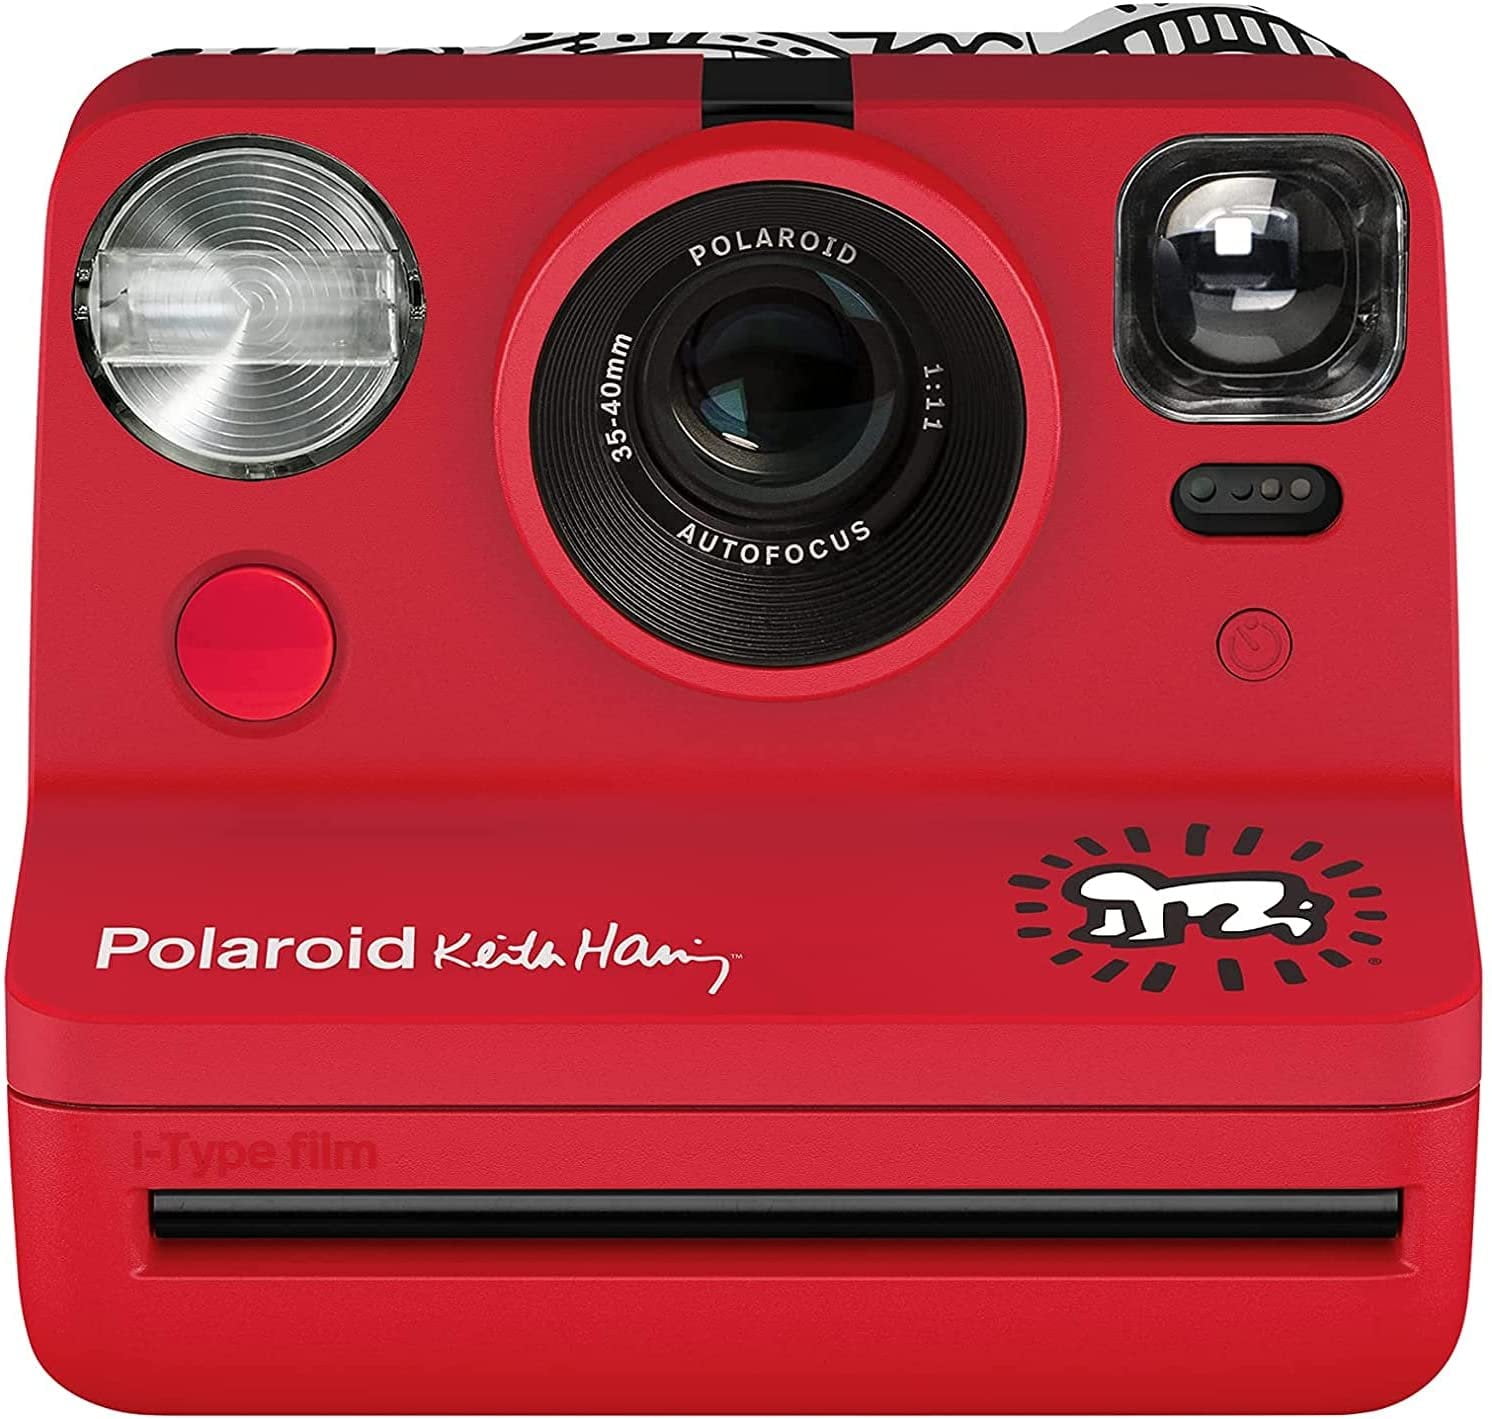 Polaroid Now i‑Type Instant Camera - The Mandalorian™ Edition